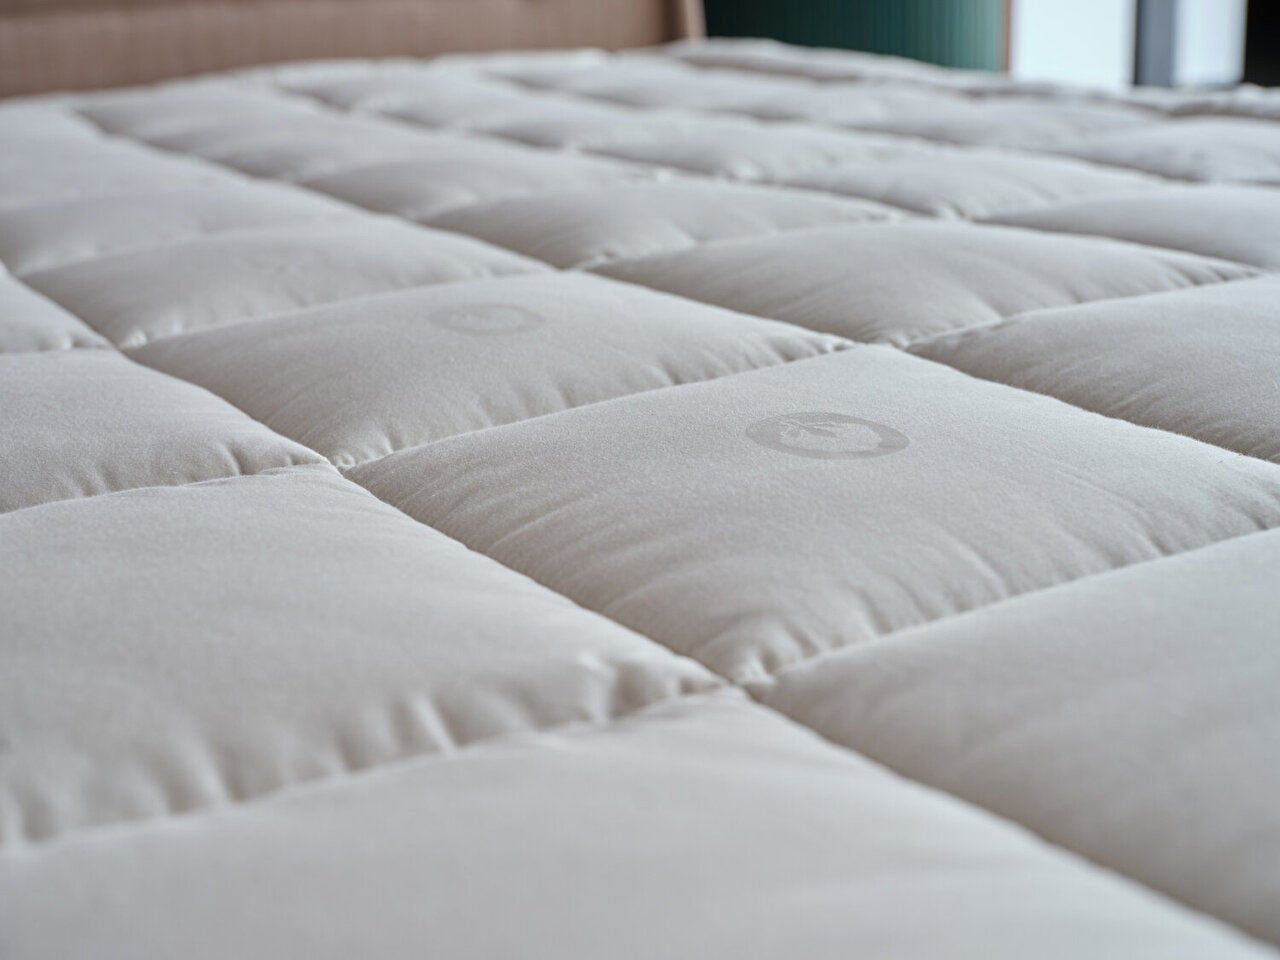 Cotton topper mattress topper